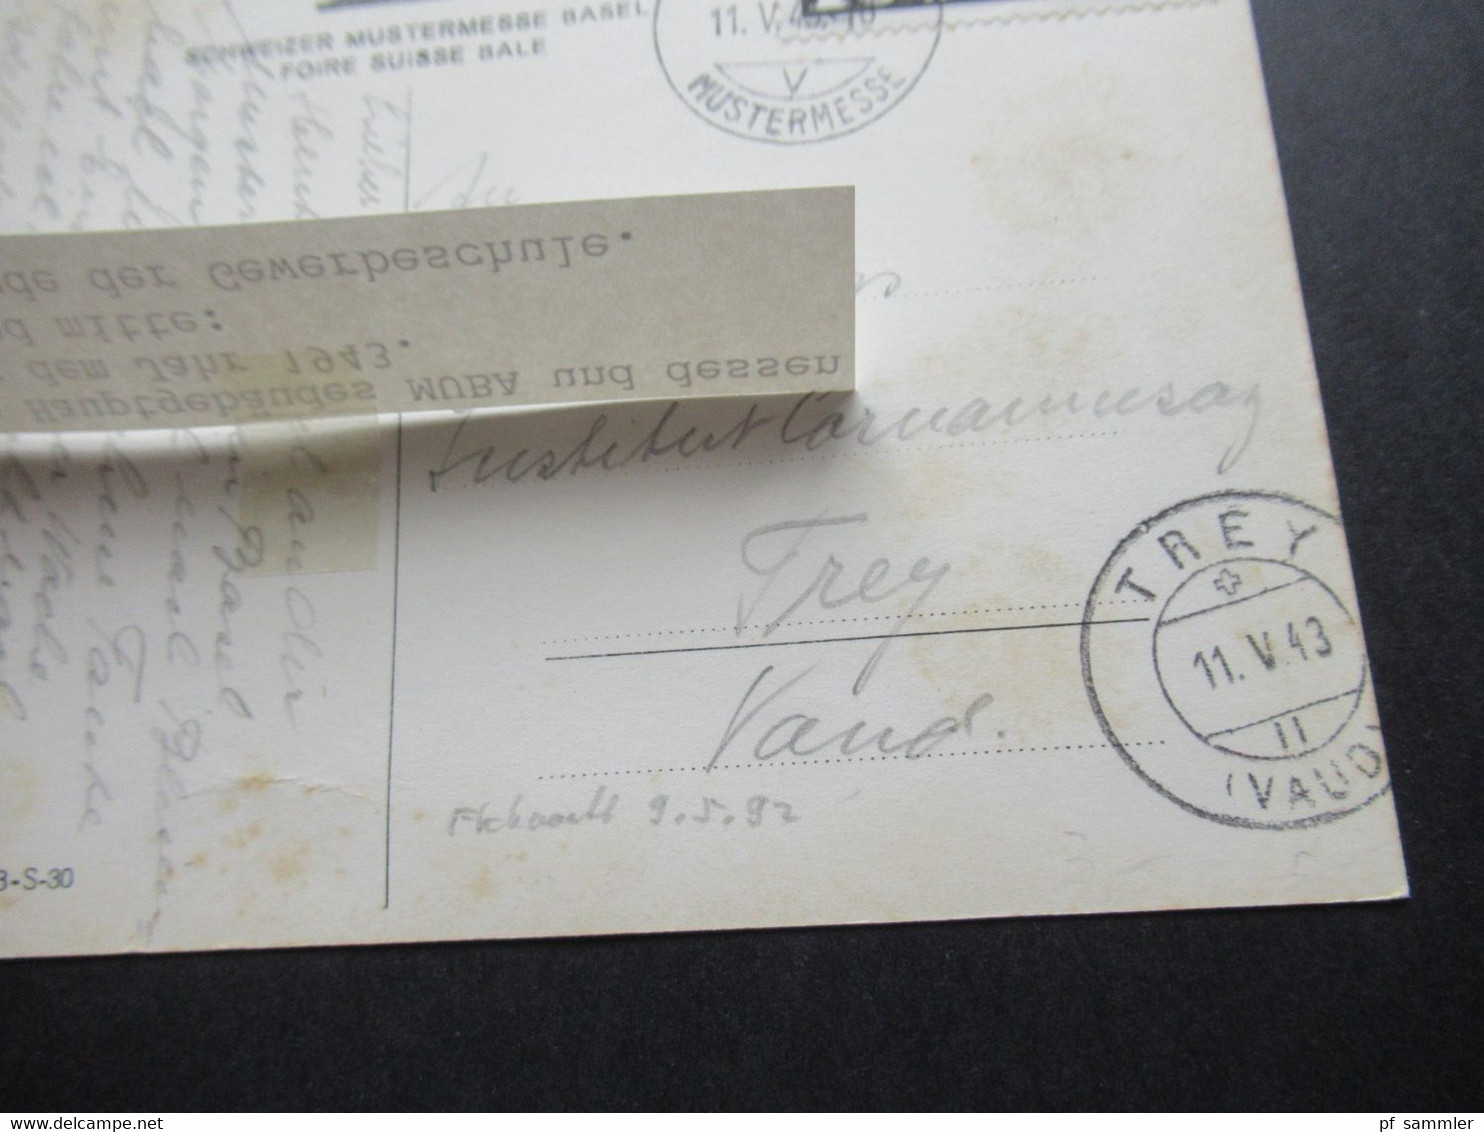 11.5.1943 Echtfoto AK Schweizer Mustermesse Basel MUBA Fernverkehr Inland Nach Trey - Storia Postale